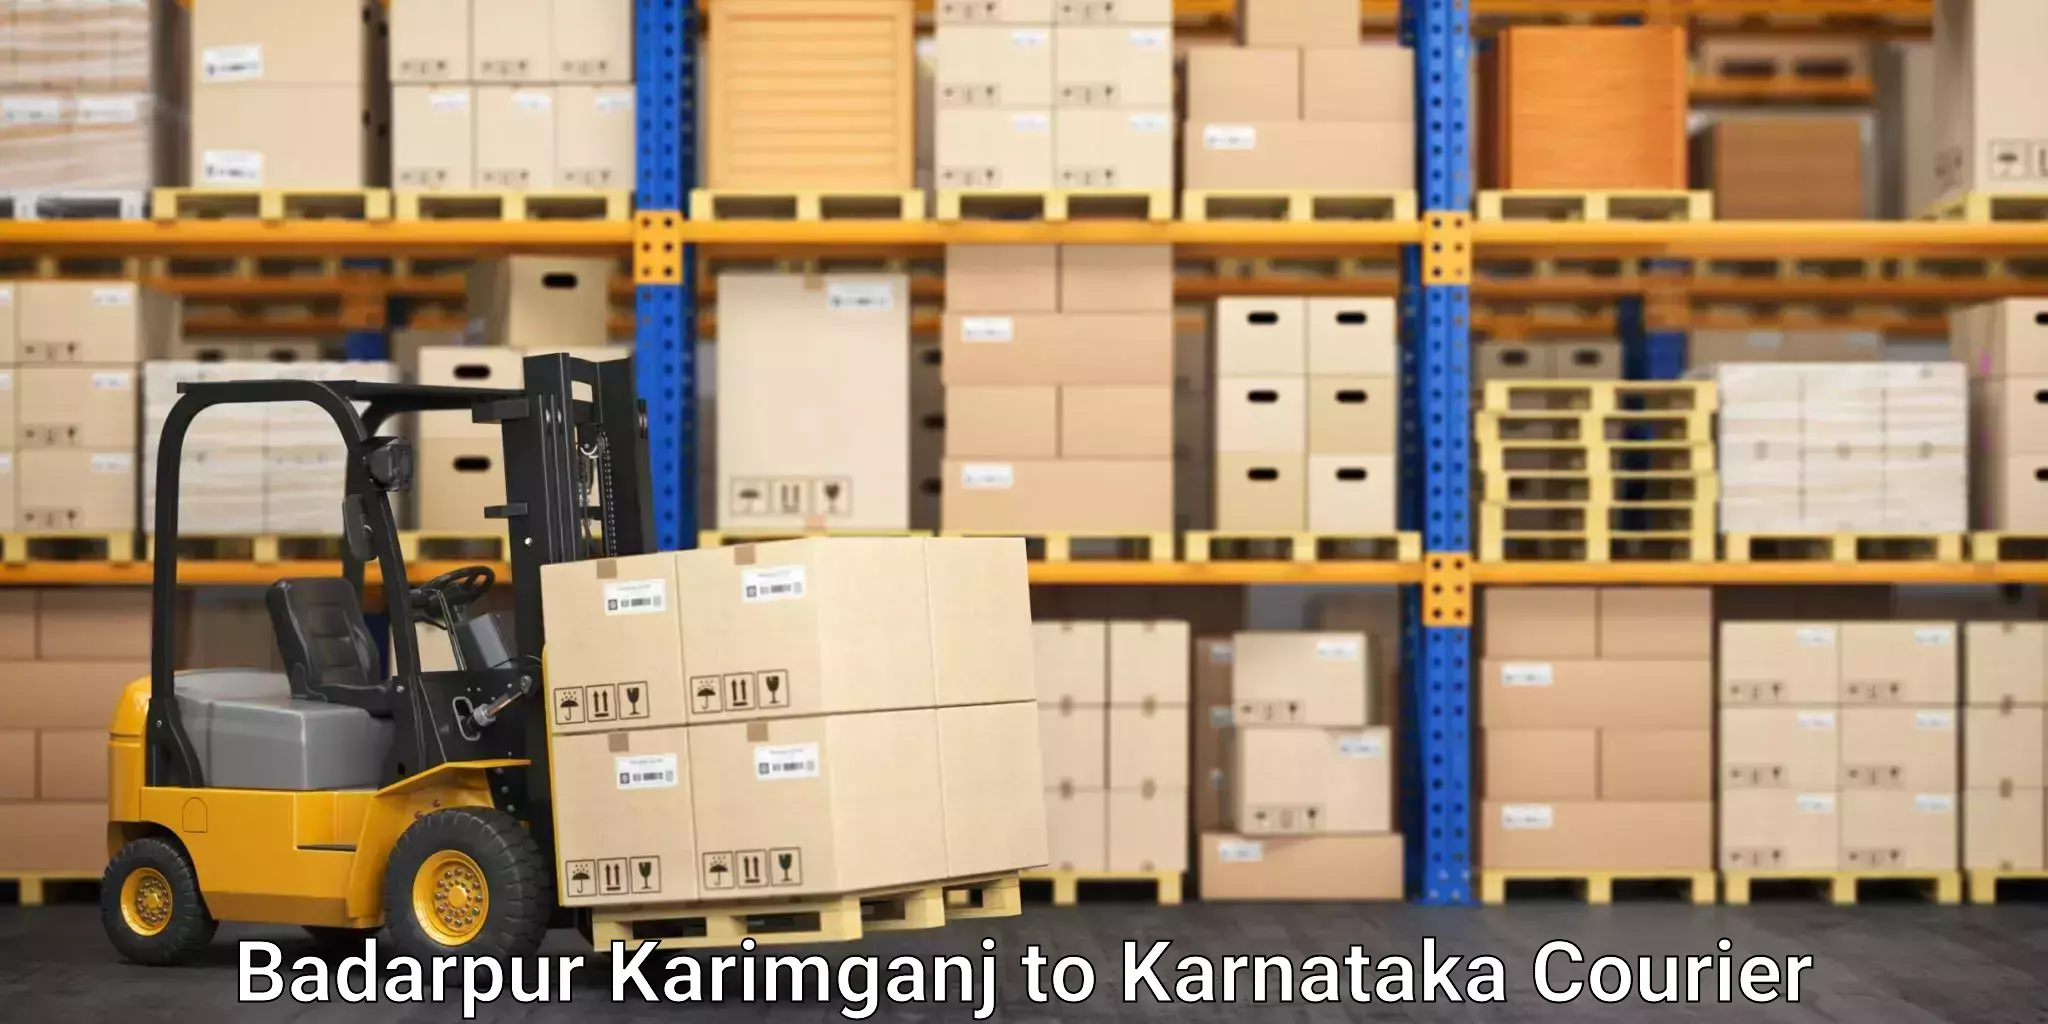 Smart logistics solutions Badarpur Karimganj to Karnataka